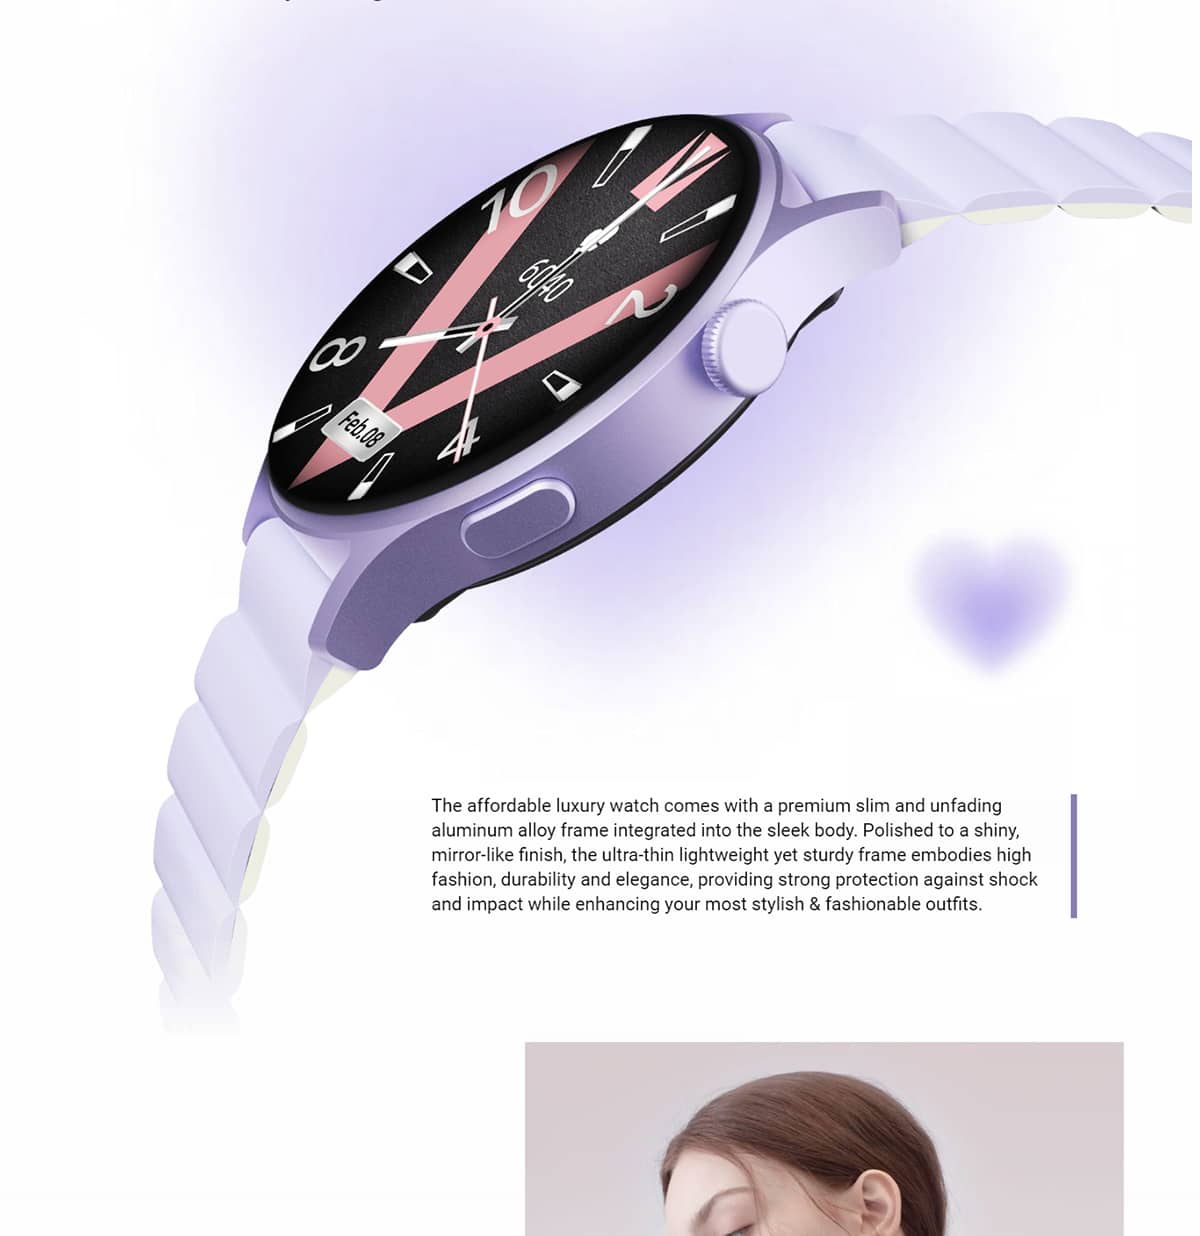 ساعت هوشمند کیسلکت مدل Kieslect Lady Watch Lora 2